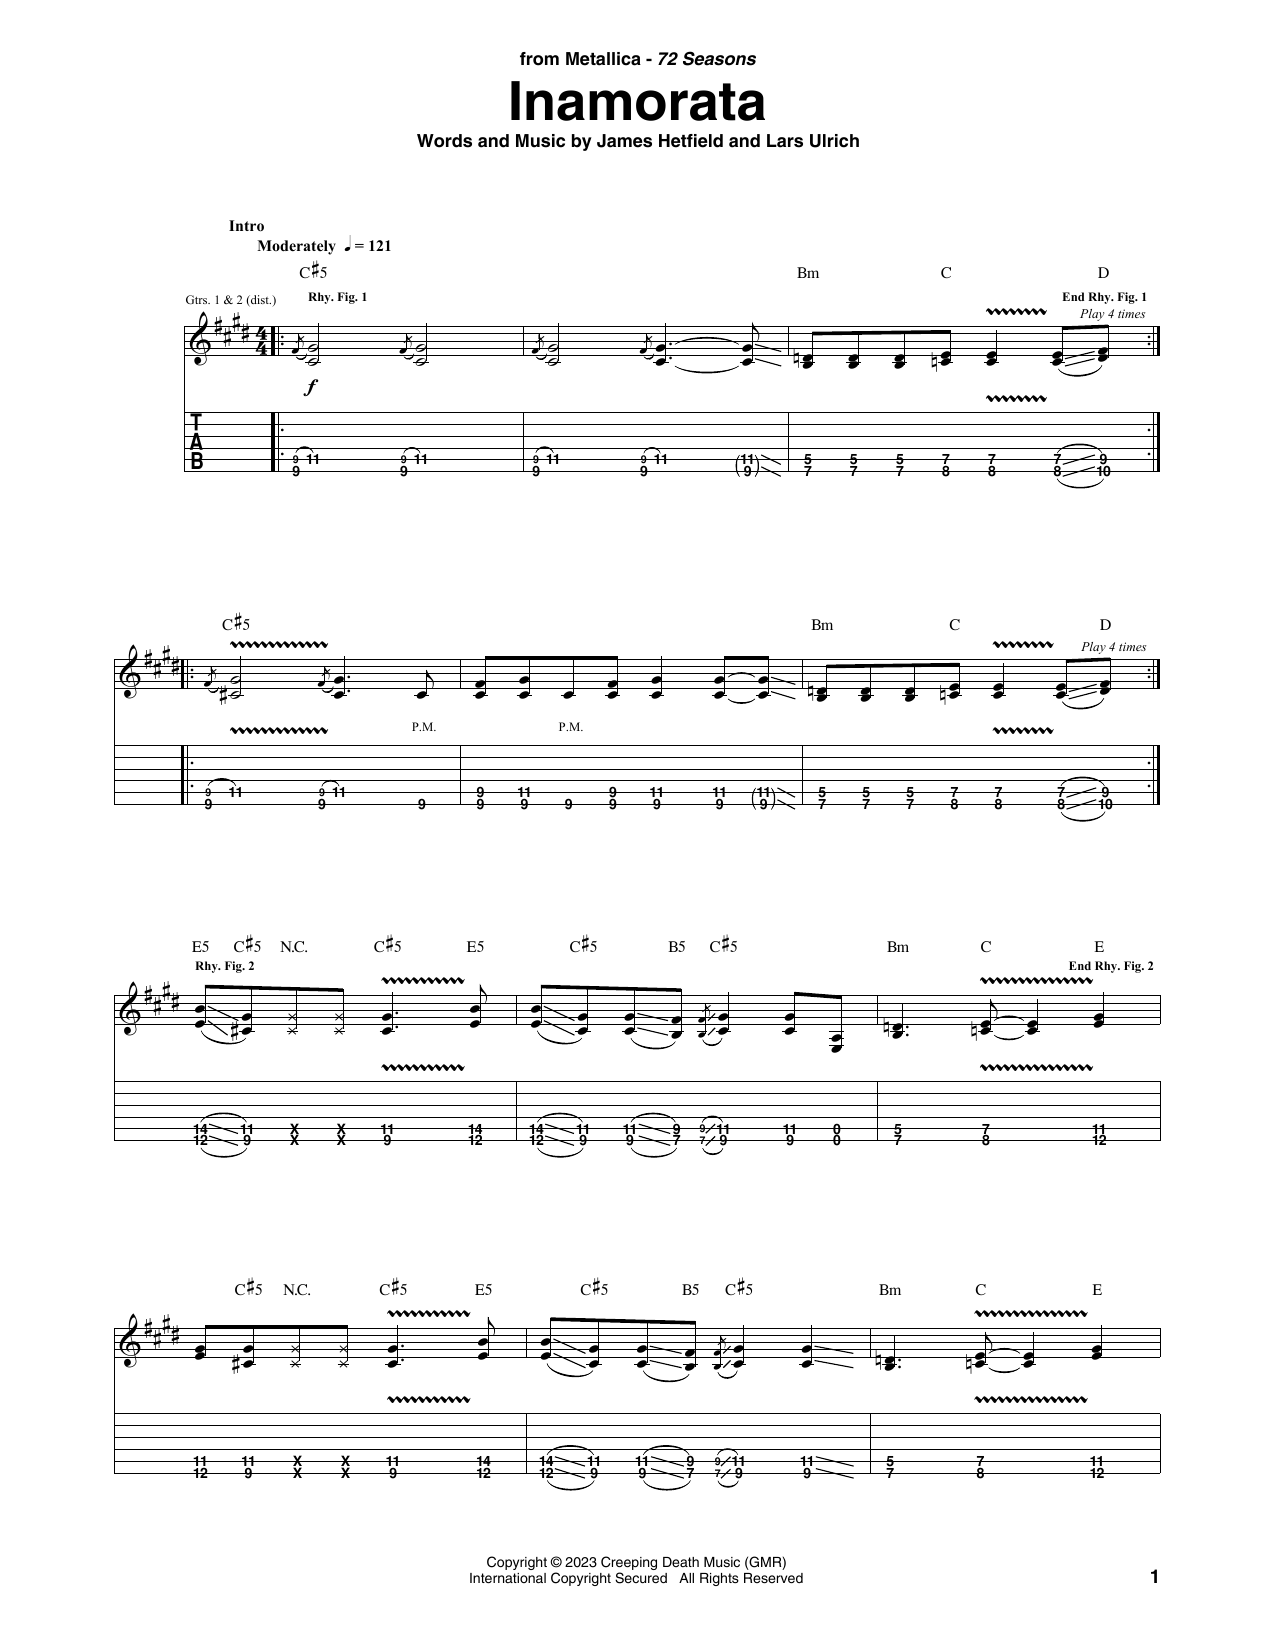 Metallica Inamorata Sheet Music Notes & Chords for Guitar Tab - Download or Print PDF